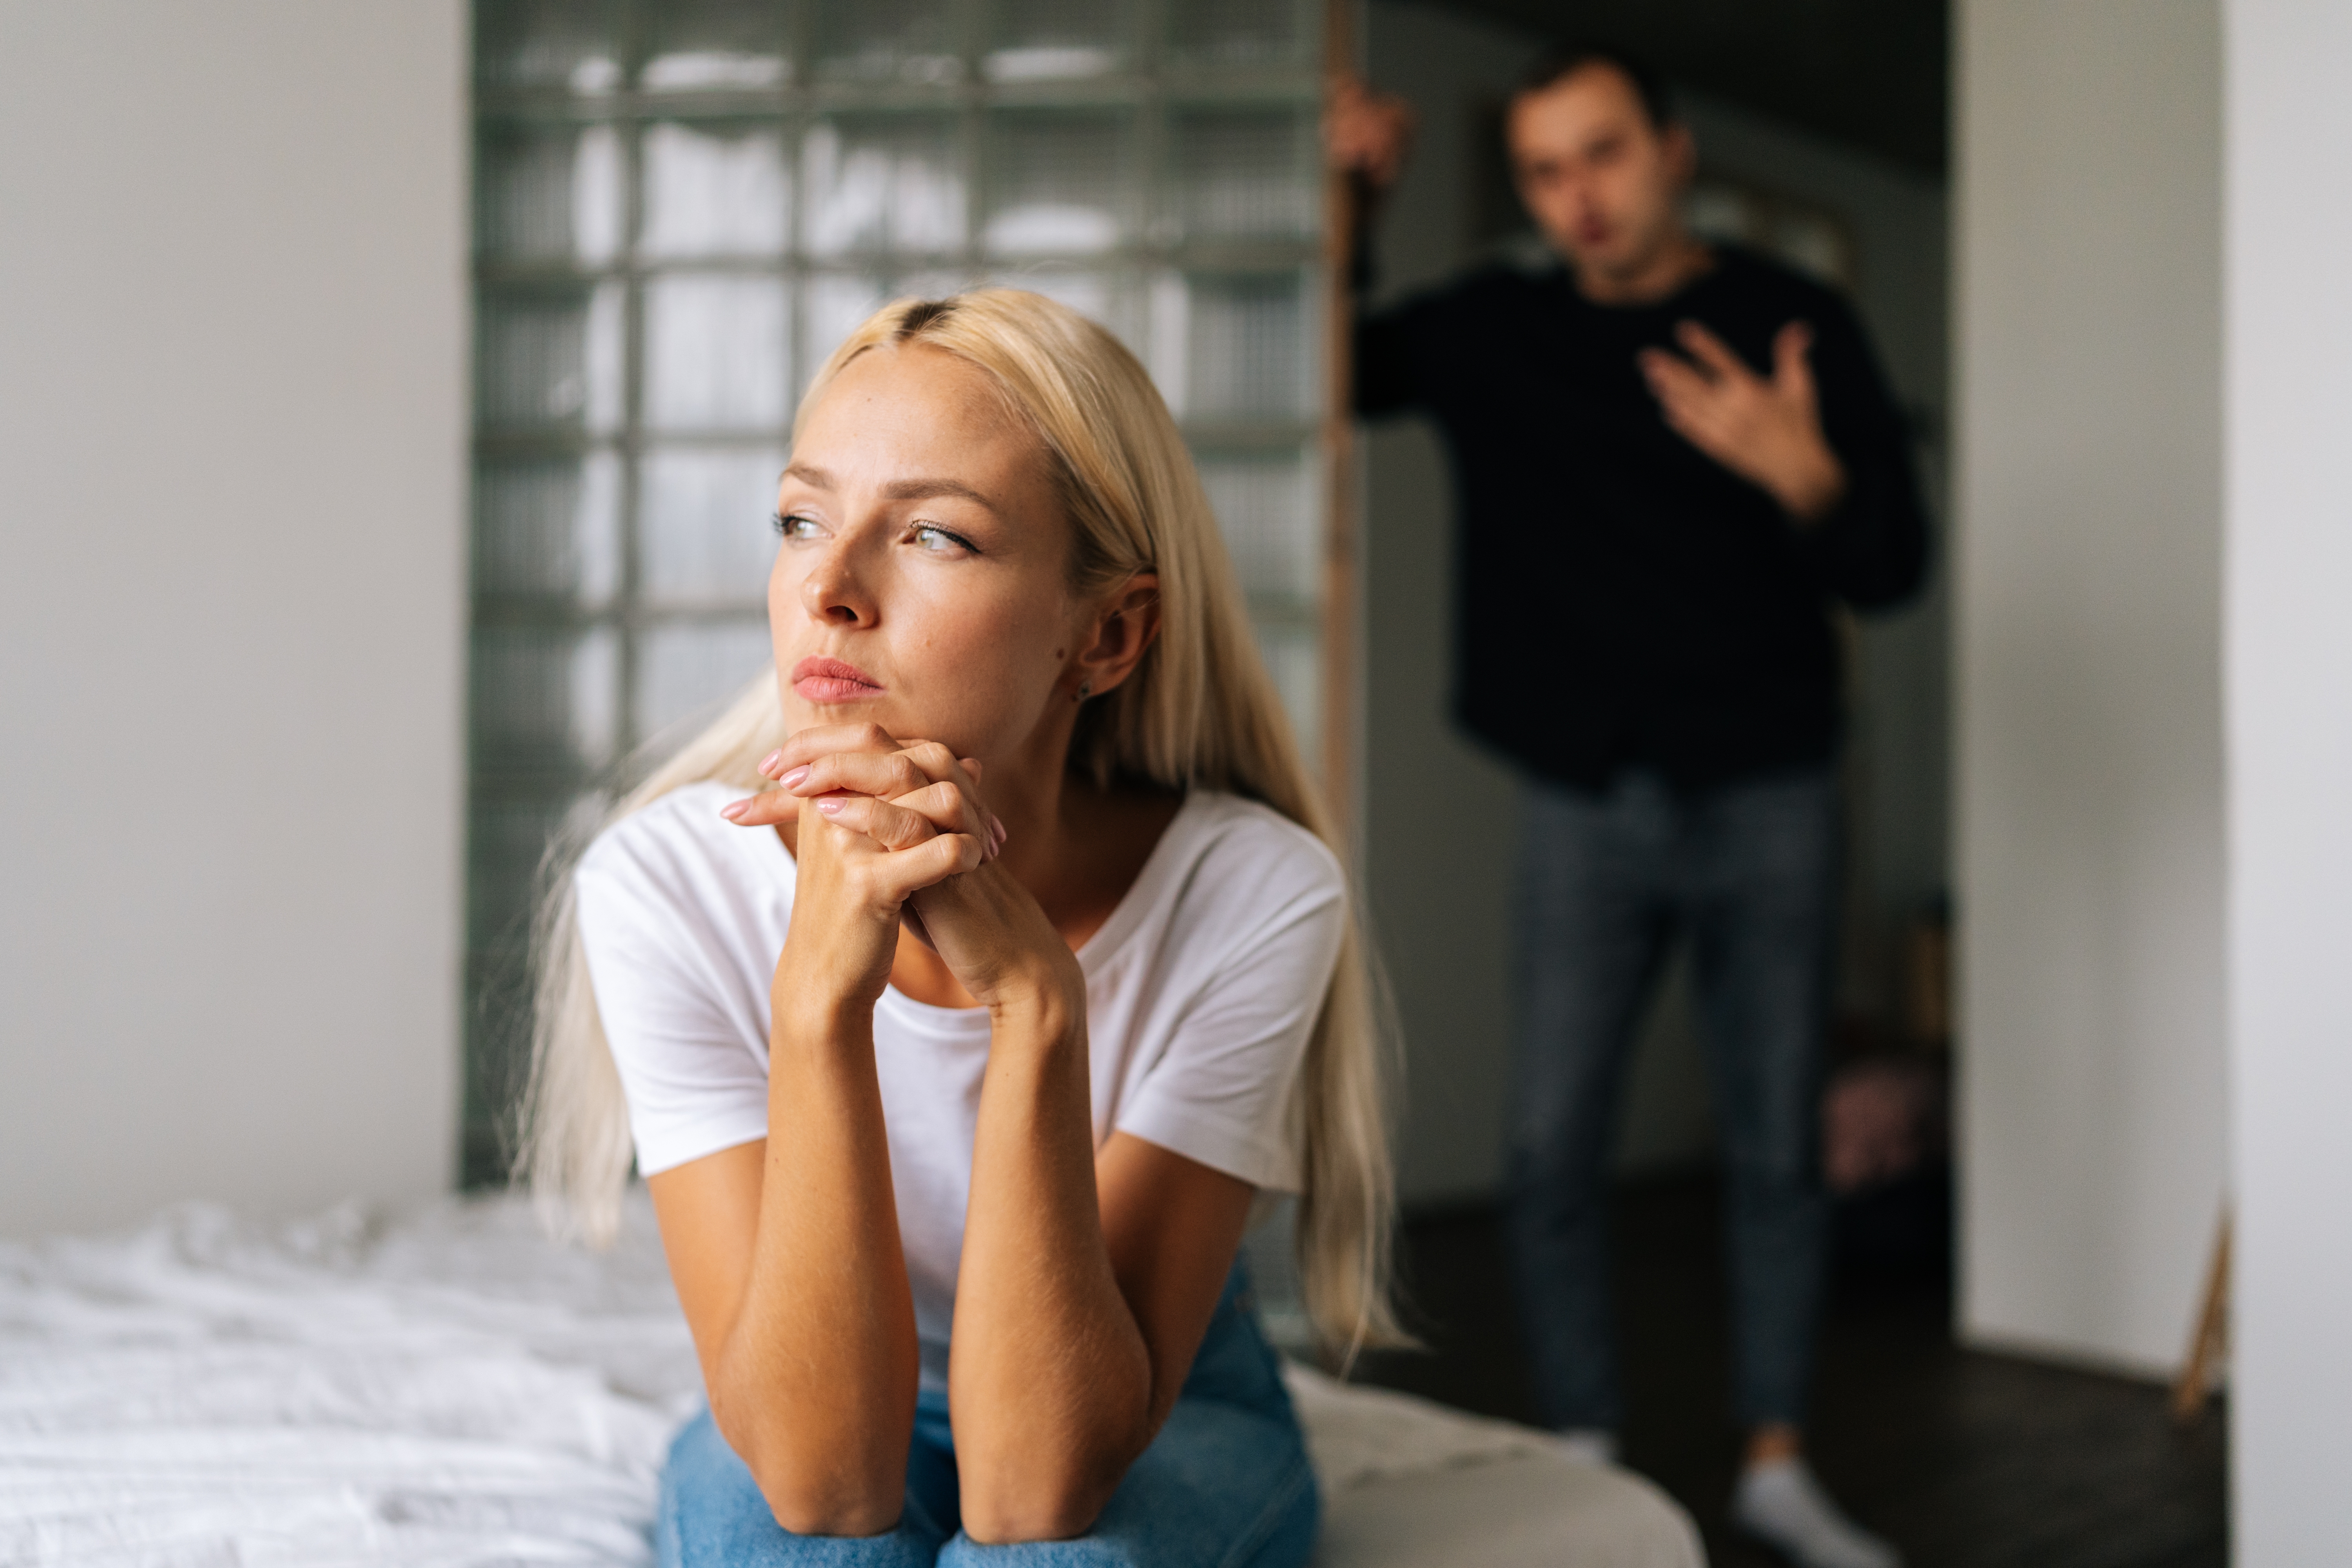 Boyfriend and girlfriend are arguing | Source: Shutterstock